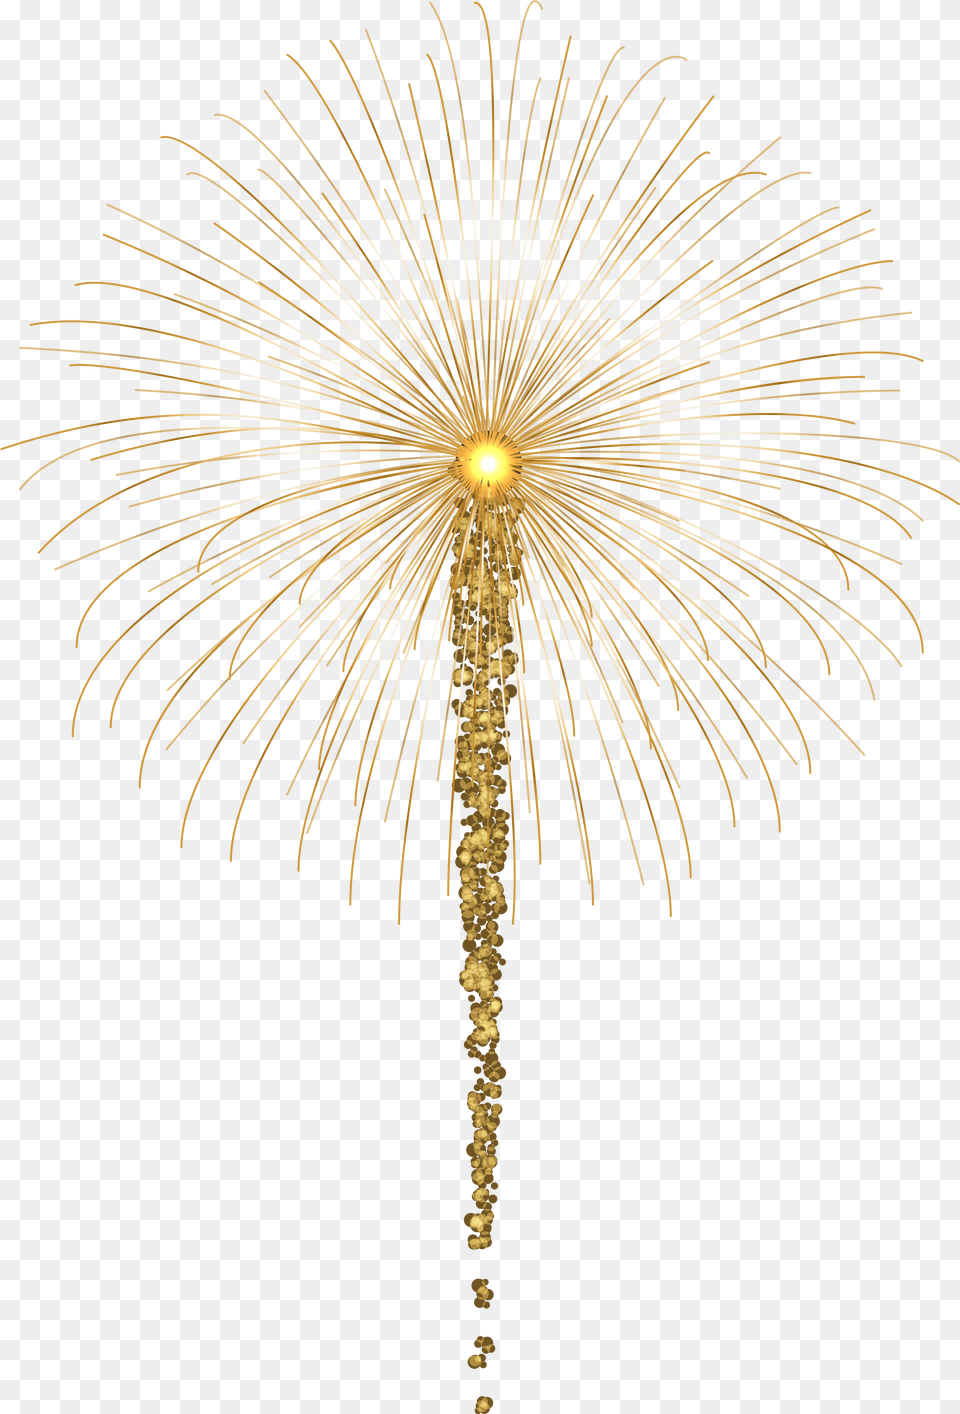 Fireworks For Dark Images Clip Art Transparent Gold Palm Tree Png